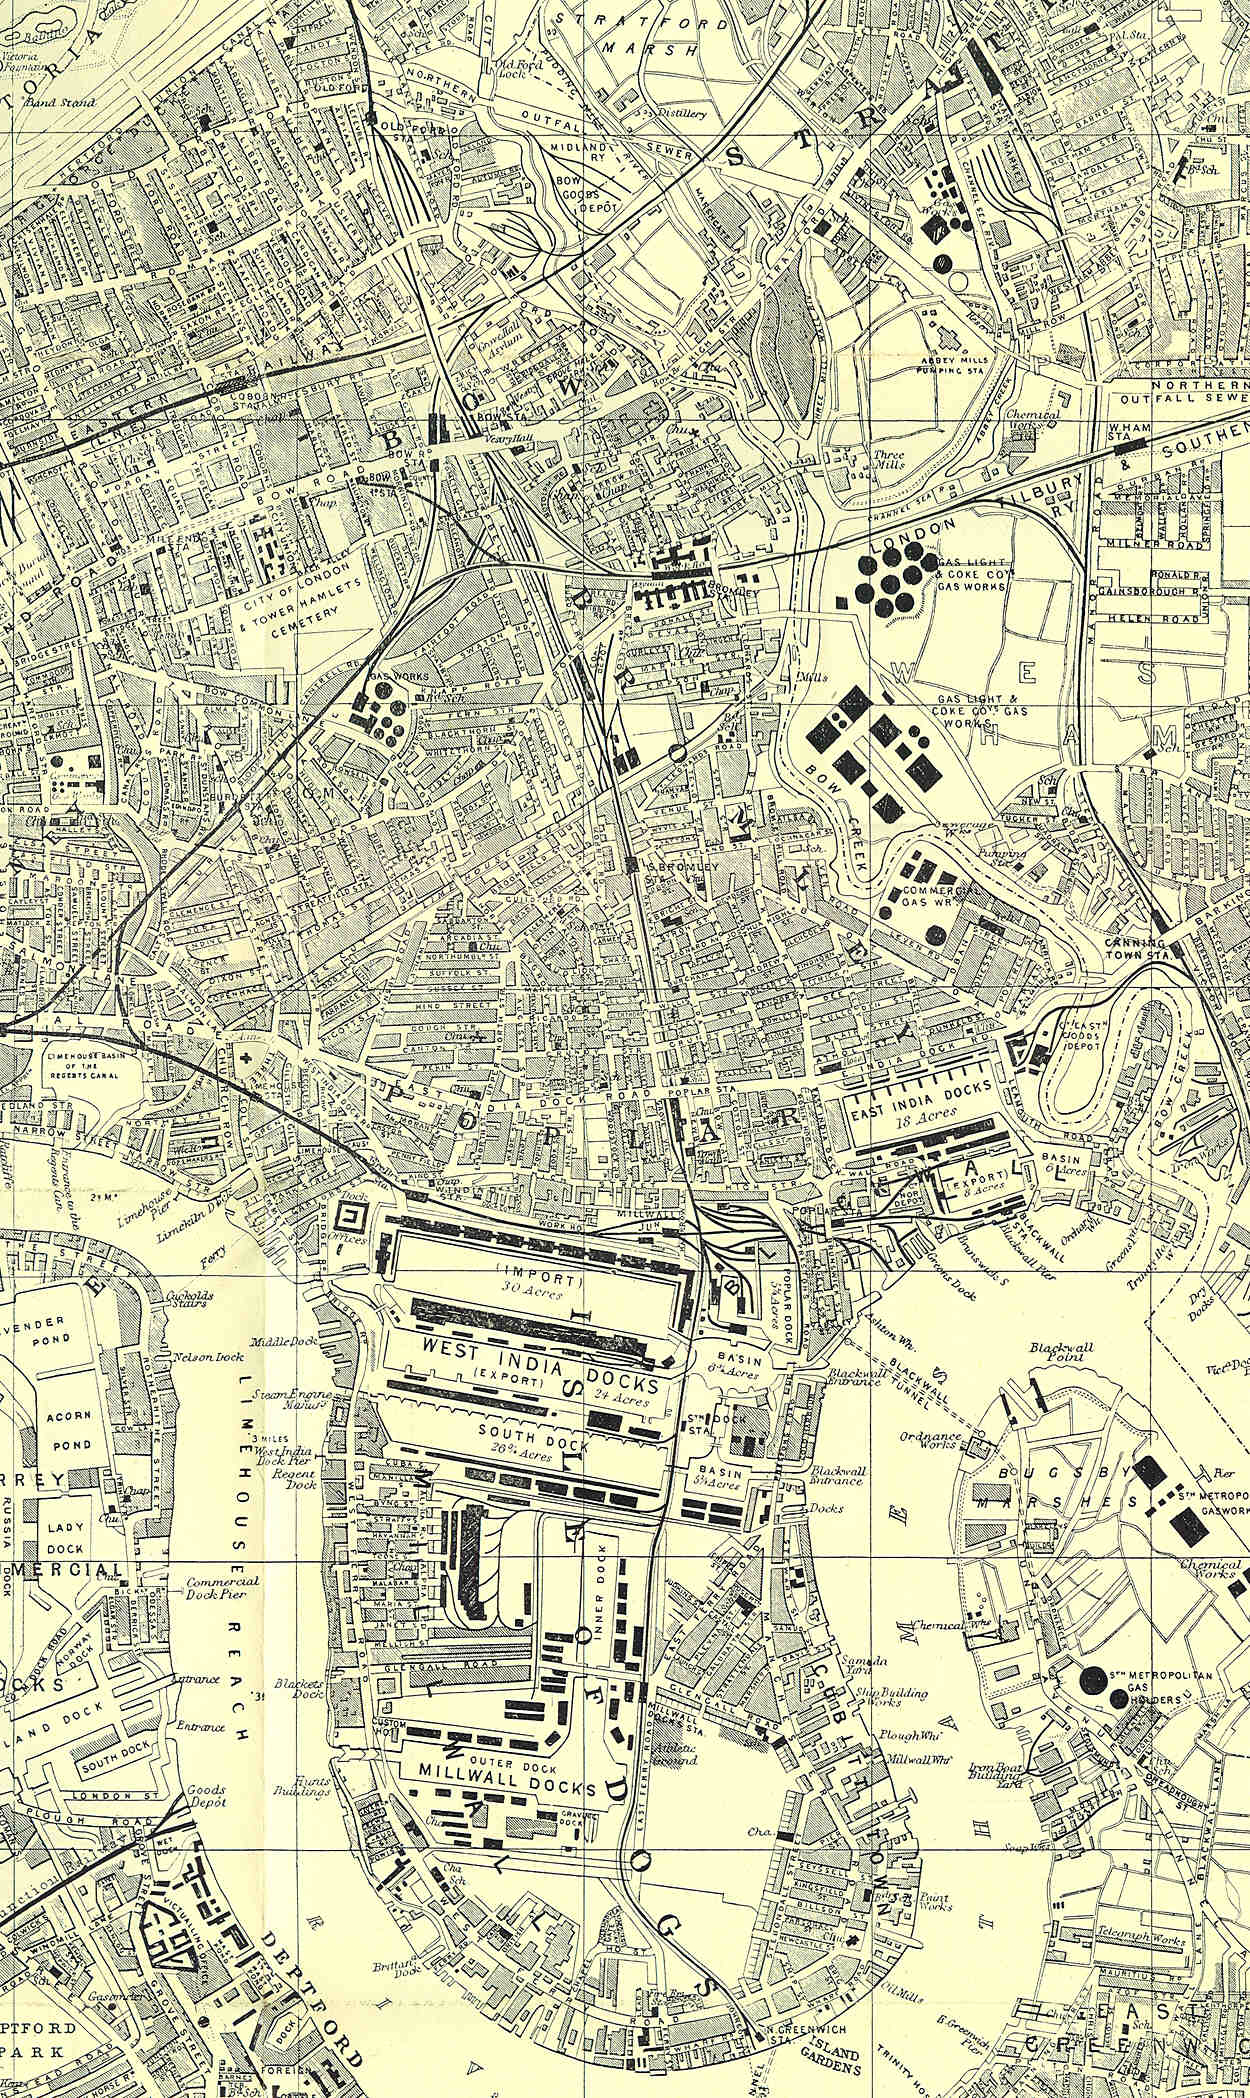 1952 - Poplar Borough Council, "Folding Plan of Poplar"